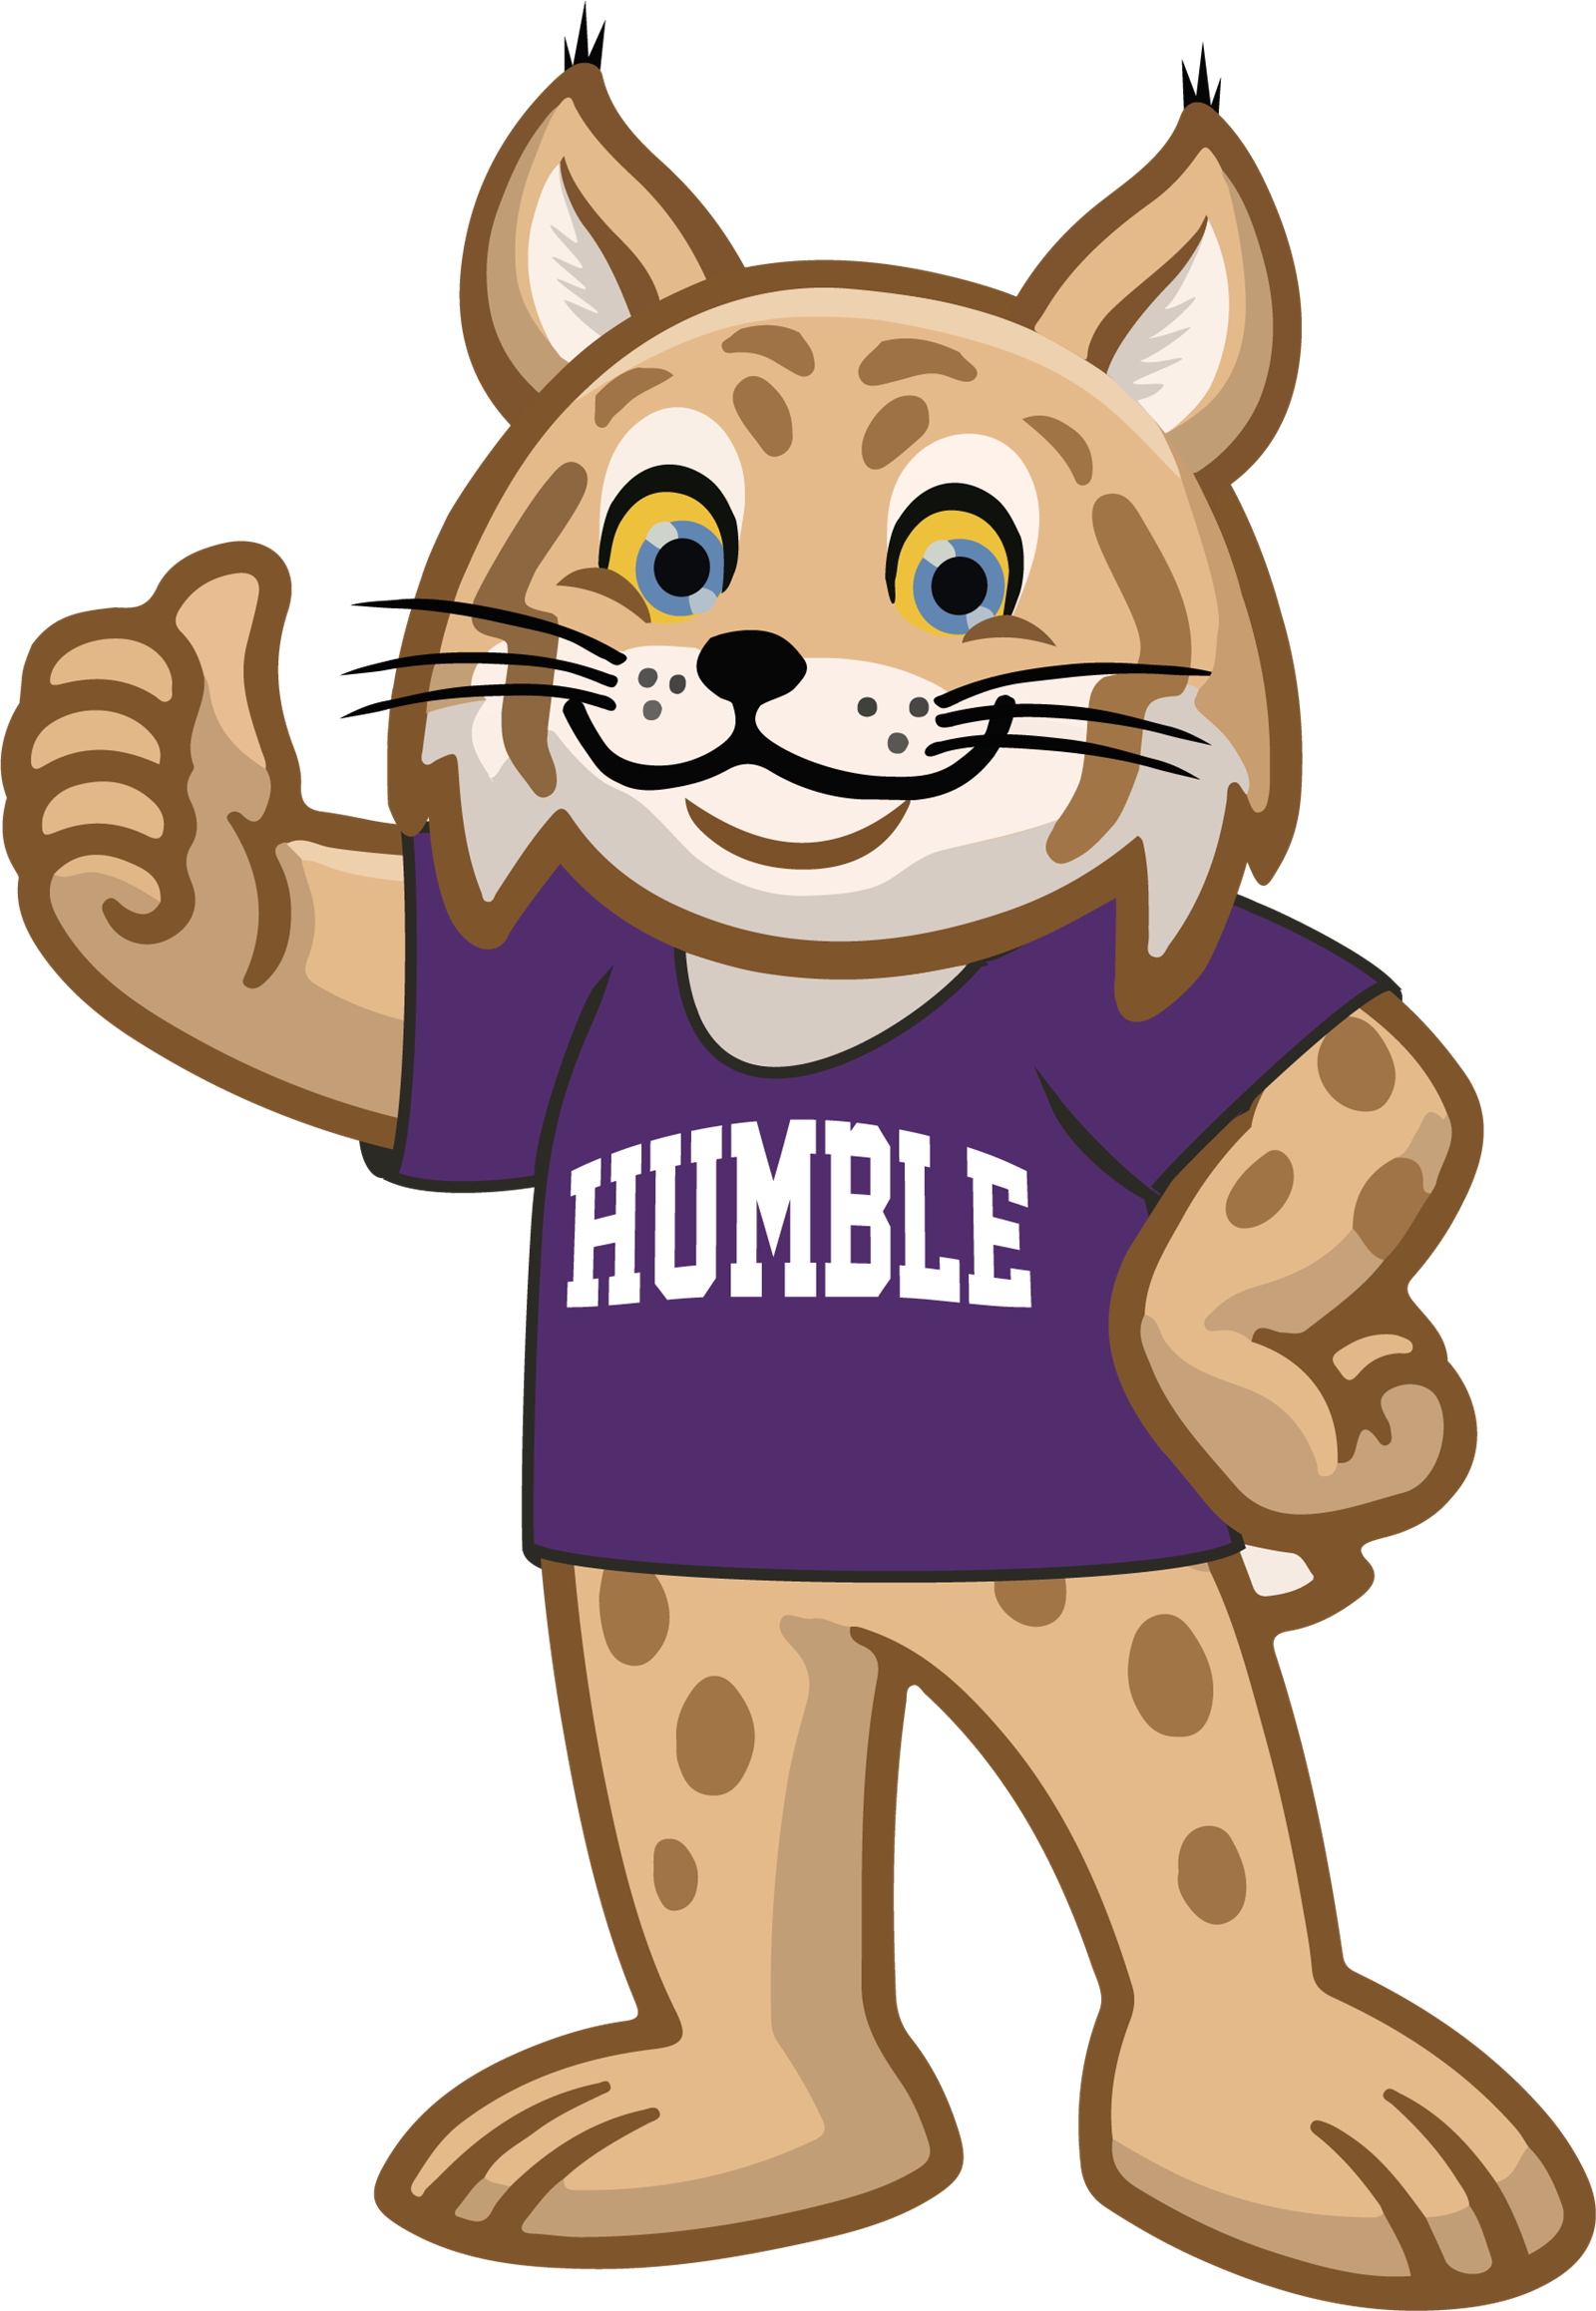 Humble Elementary logo